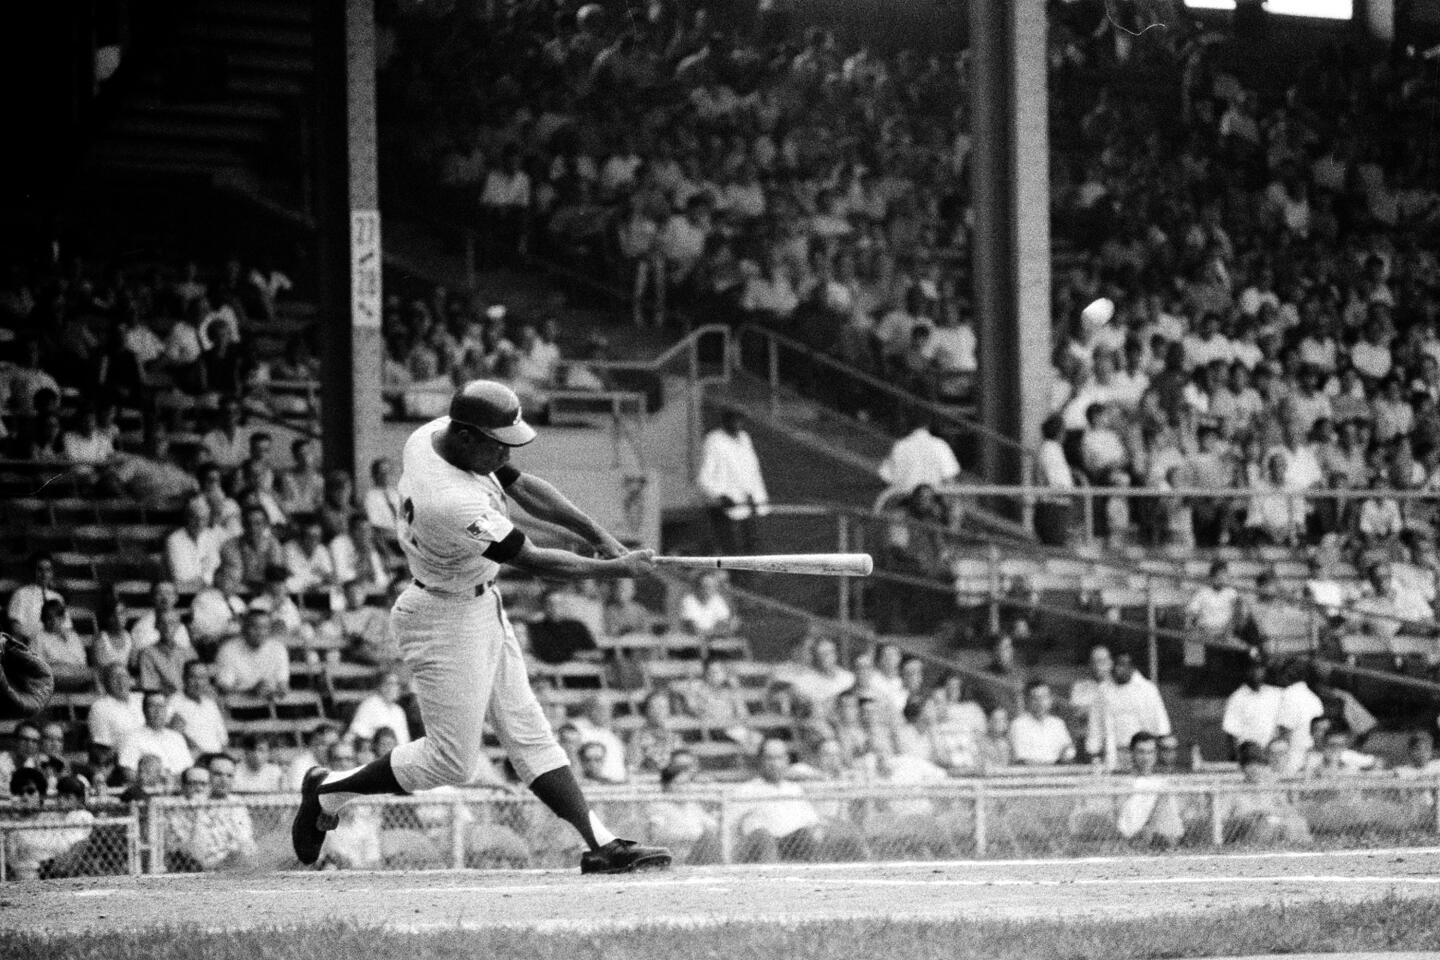 Hank Aaron, legendary baseball slugger, dies at age 86